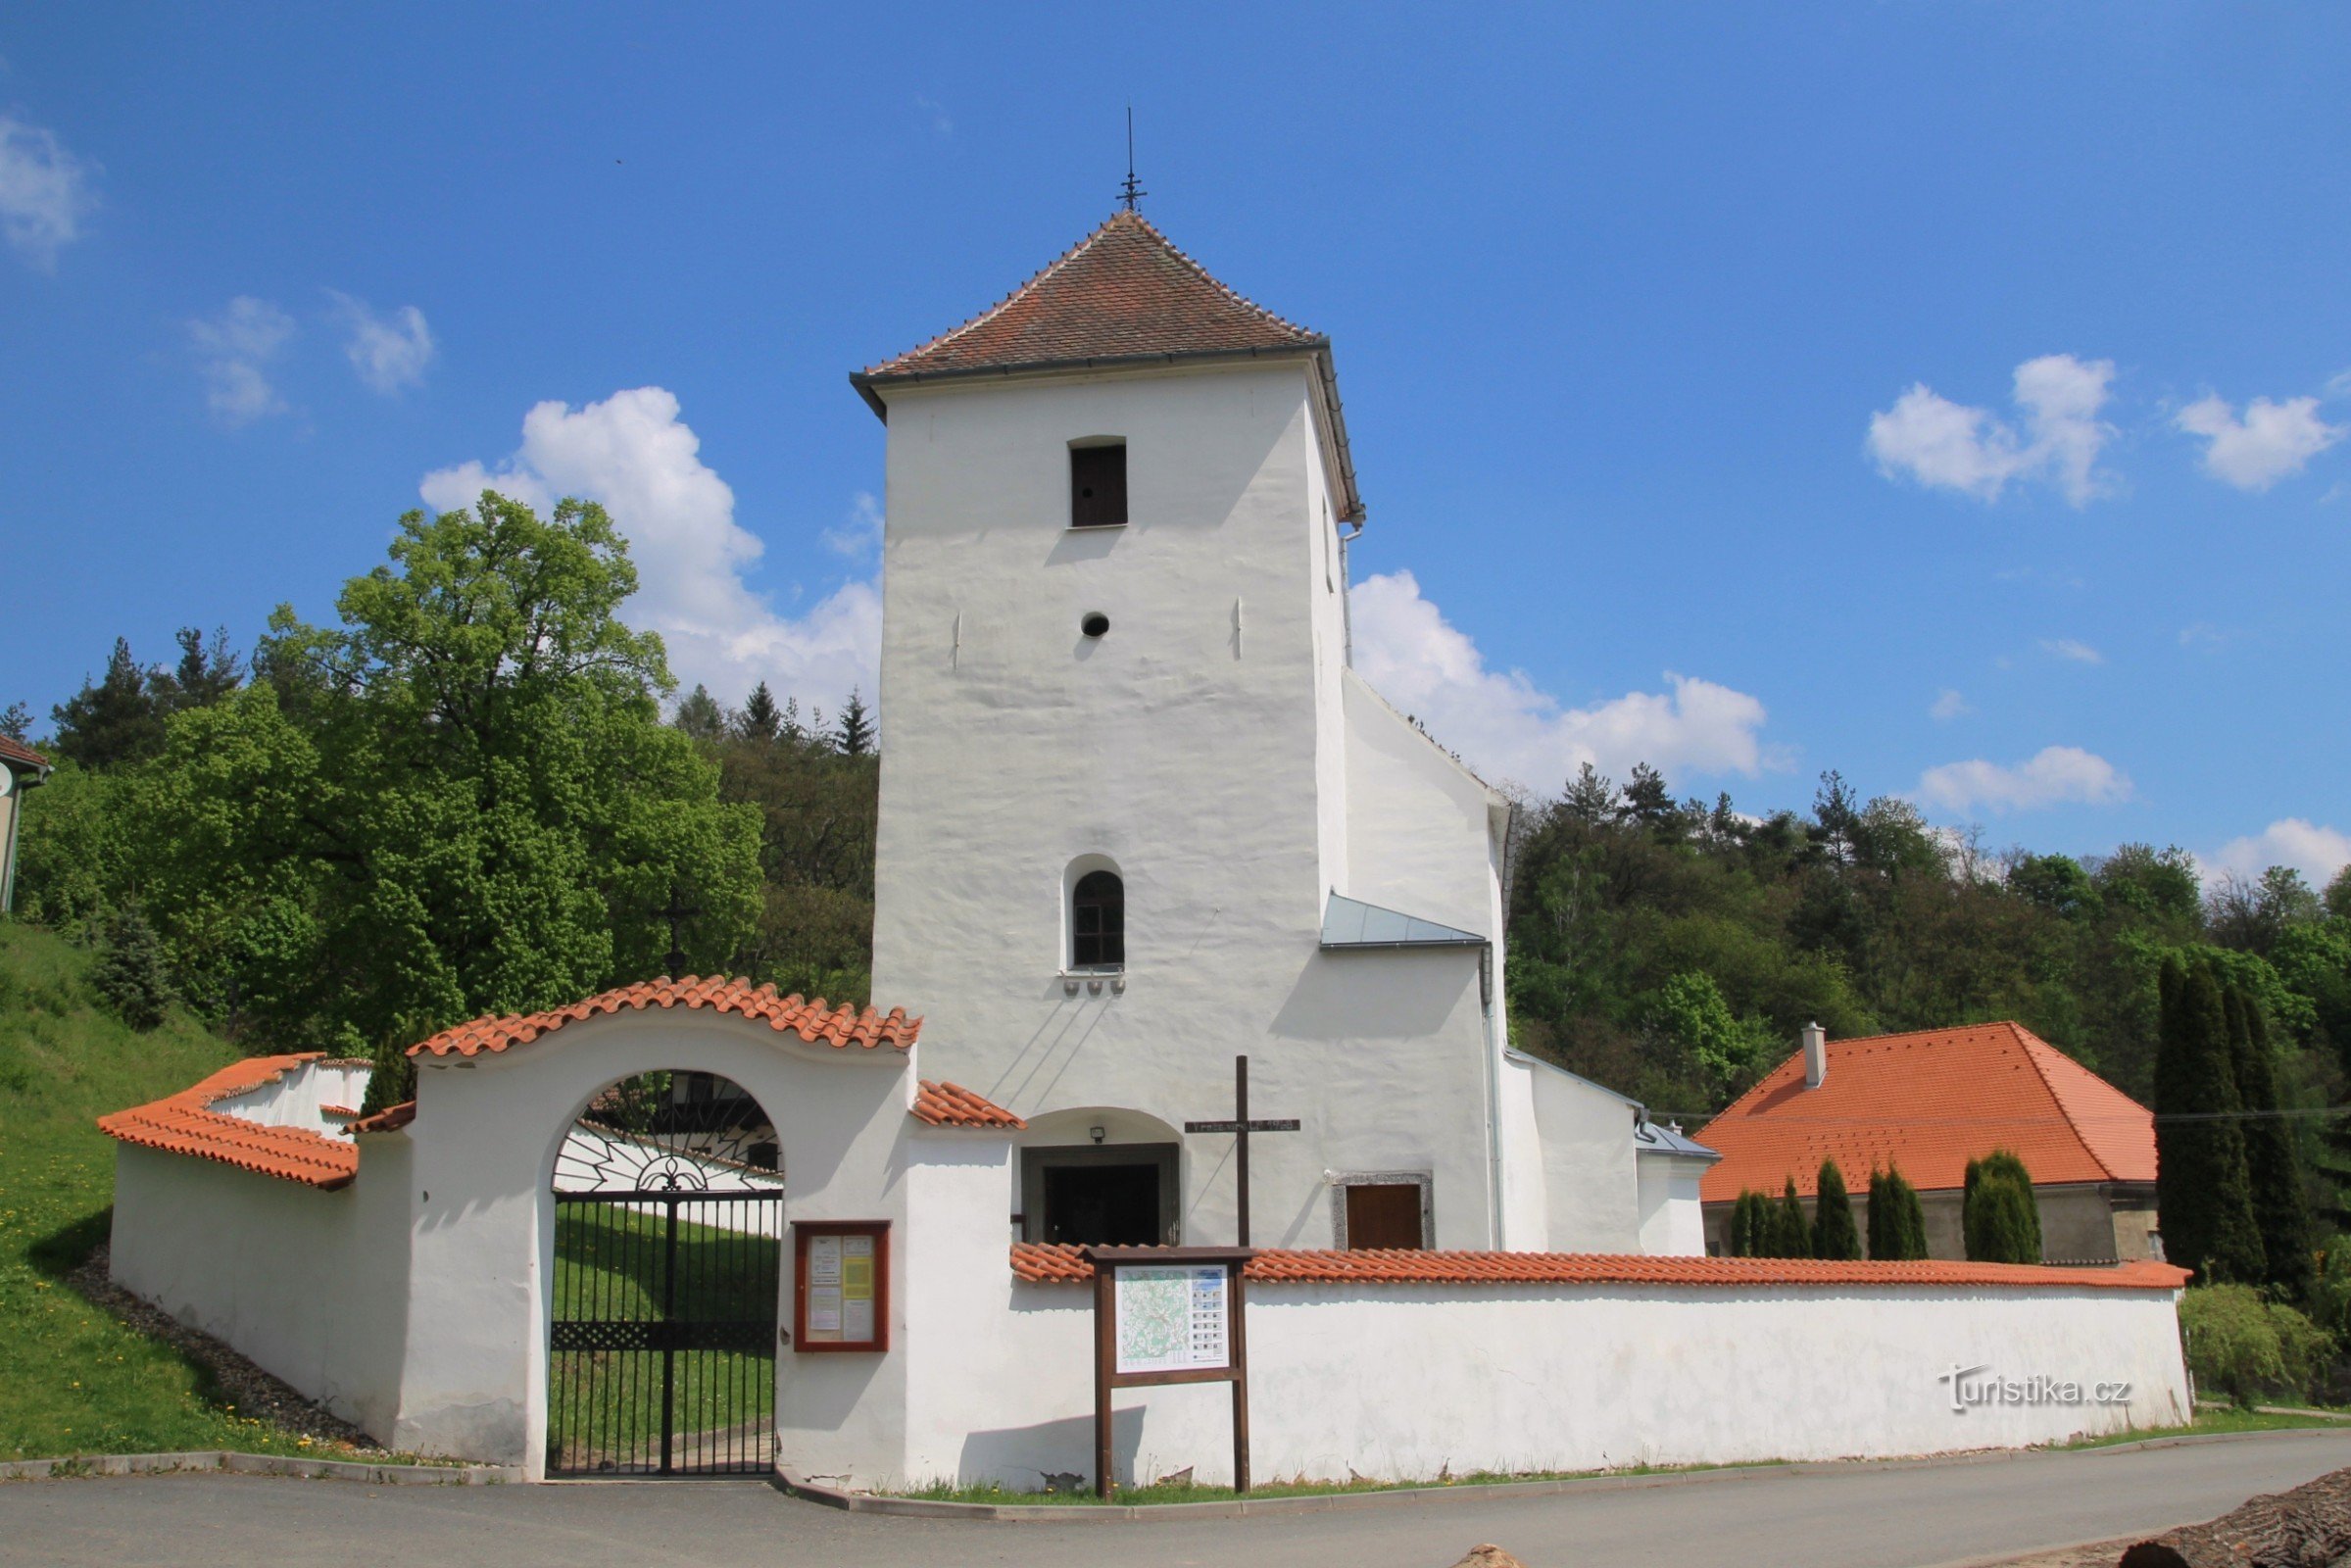 Žďárec - church of St. Peter and Paul